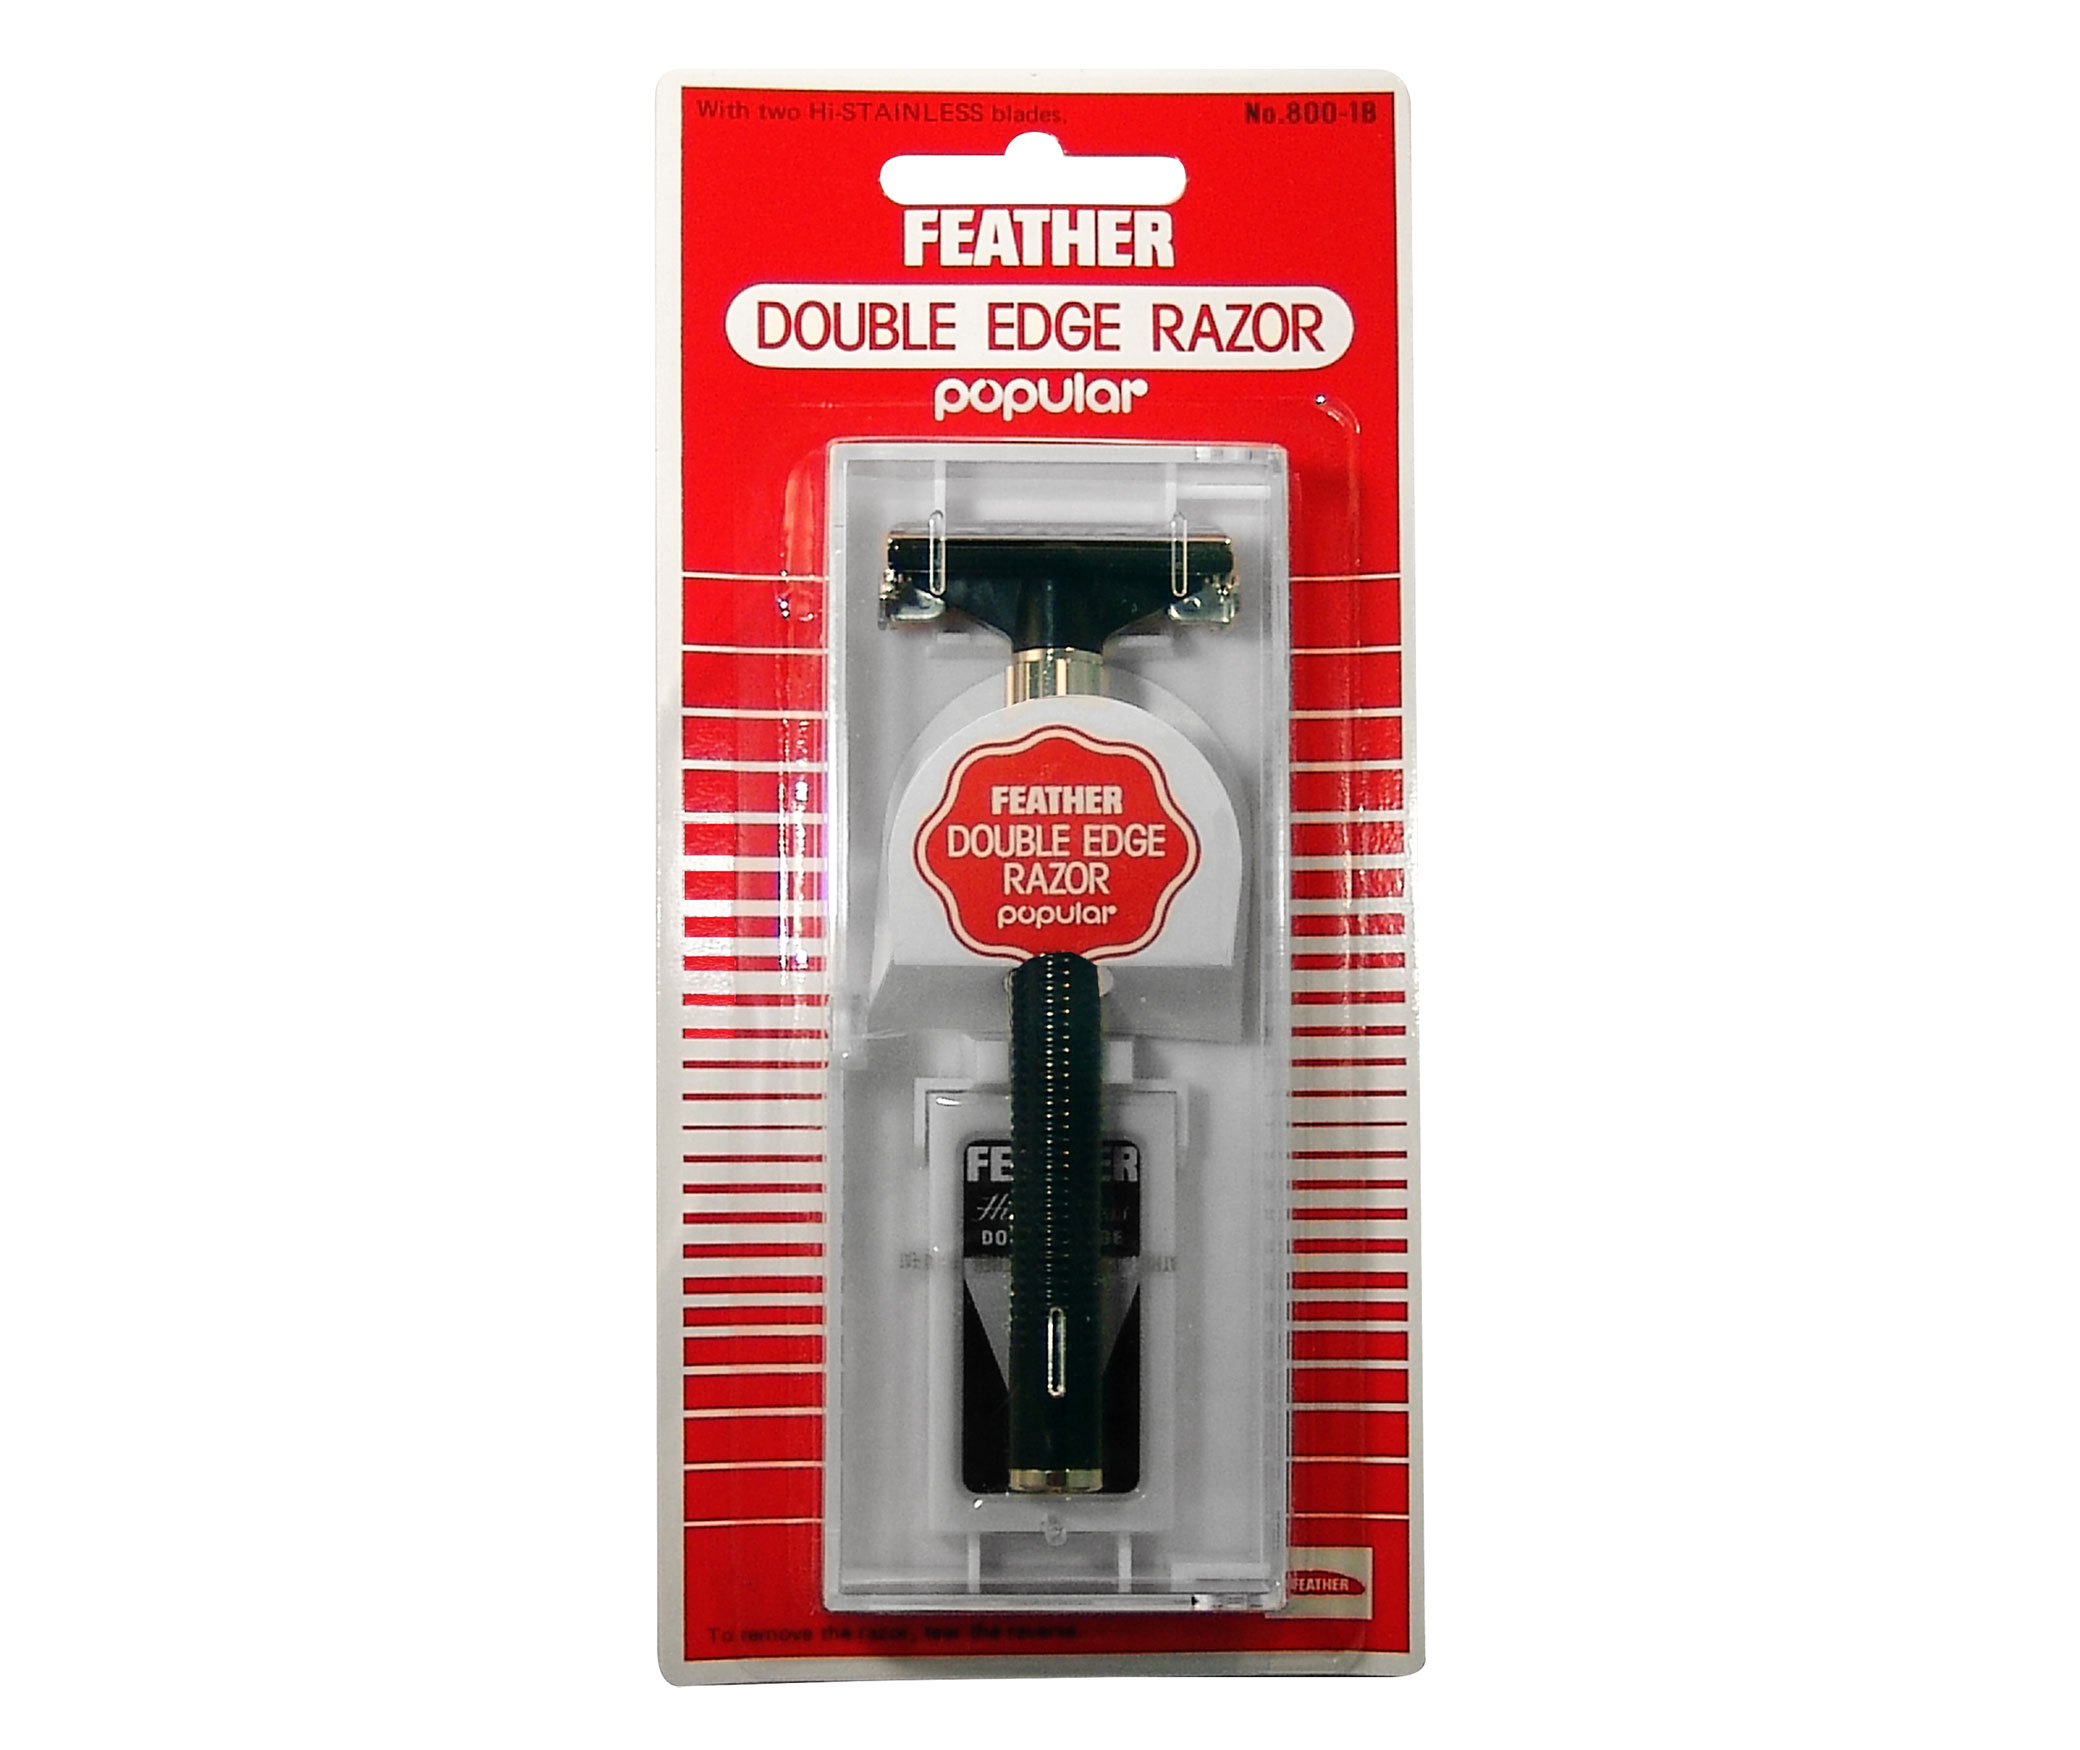 Feather Popular Double Edge Razor package